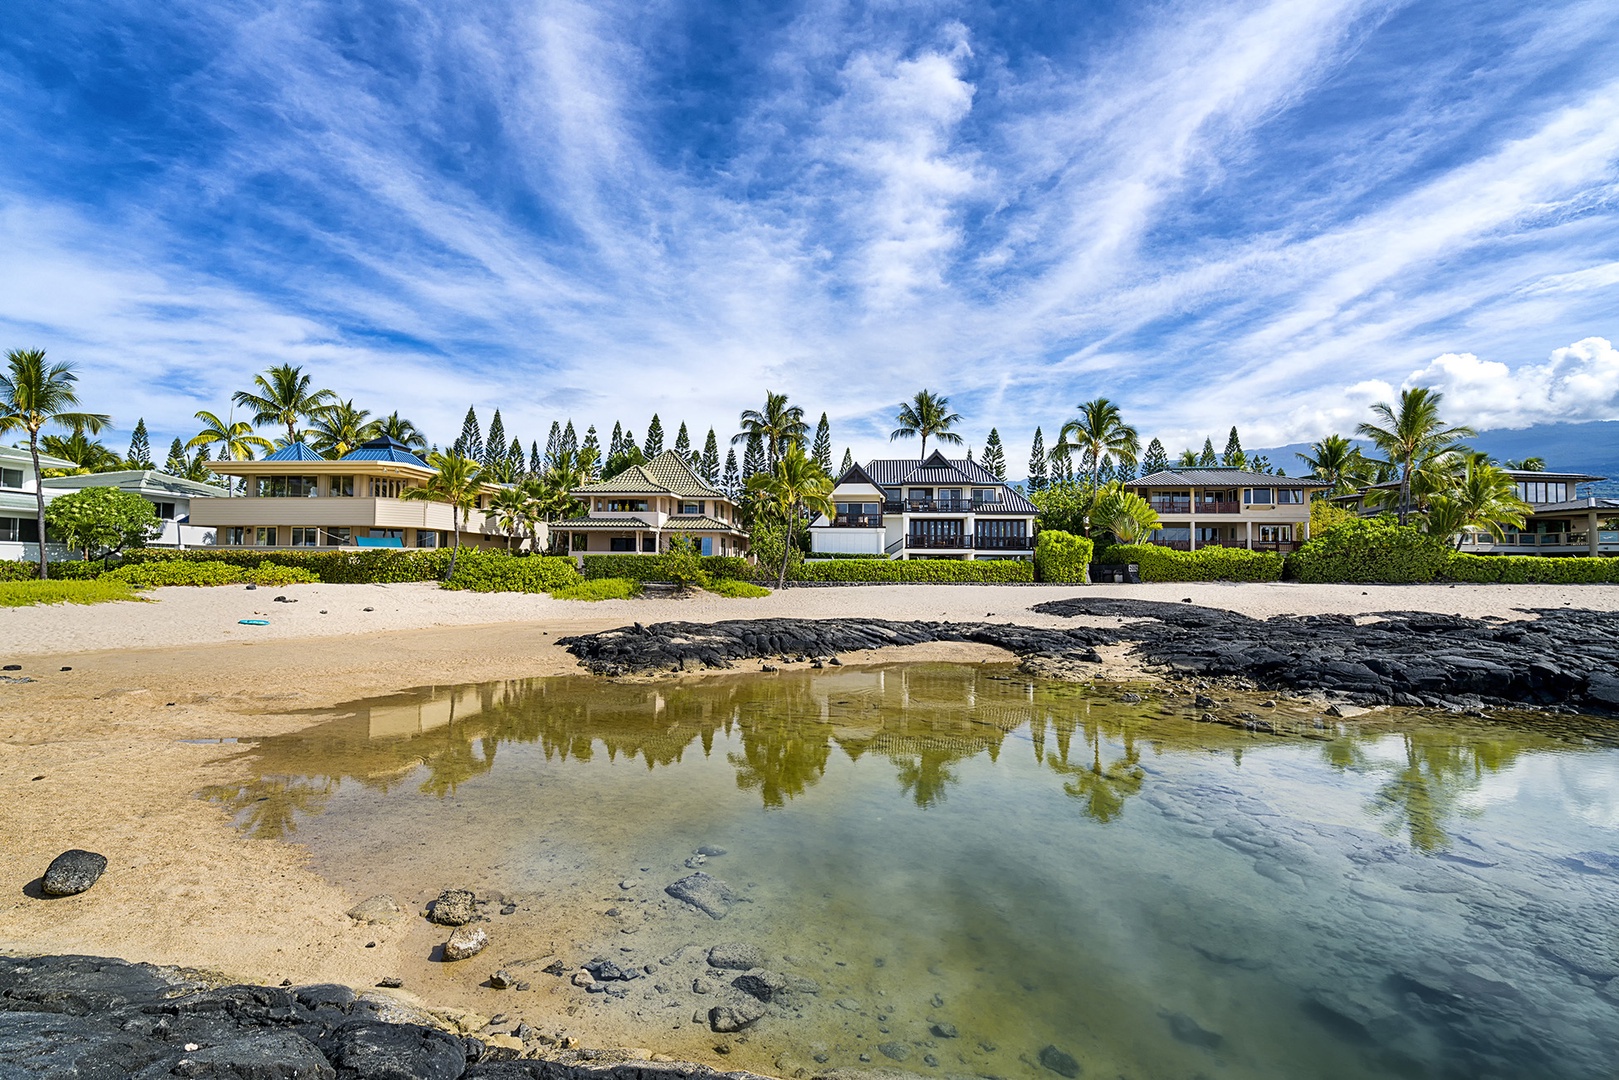 Kailua Kona Vacation Rentals, Kona Blue - Keiki ponds translating to kids beach